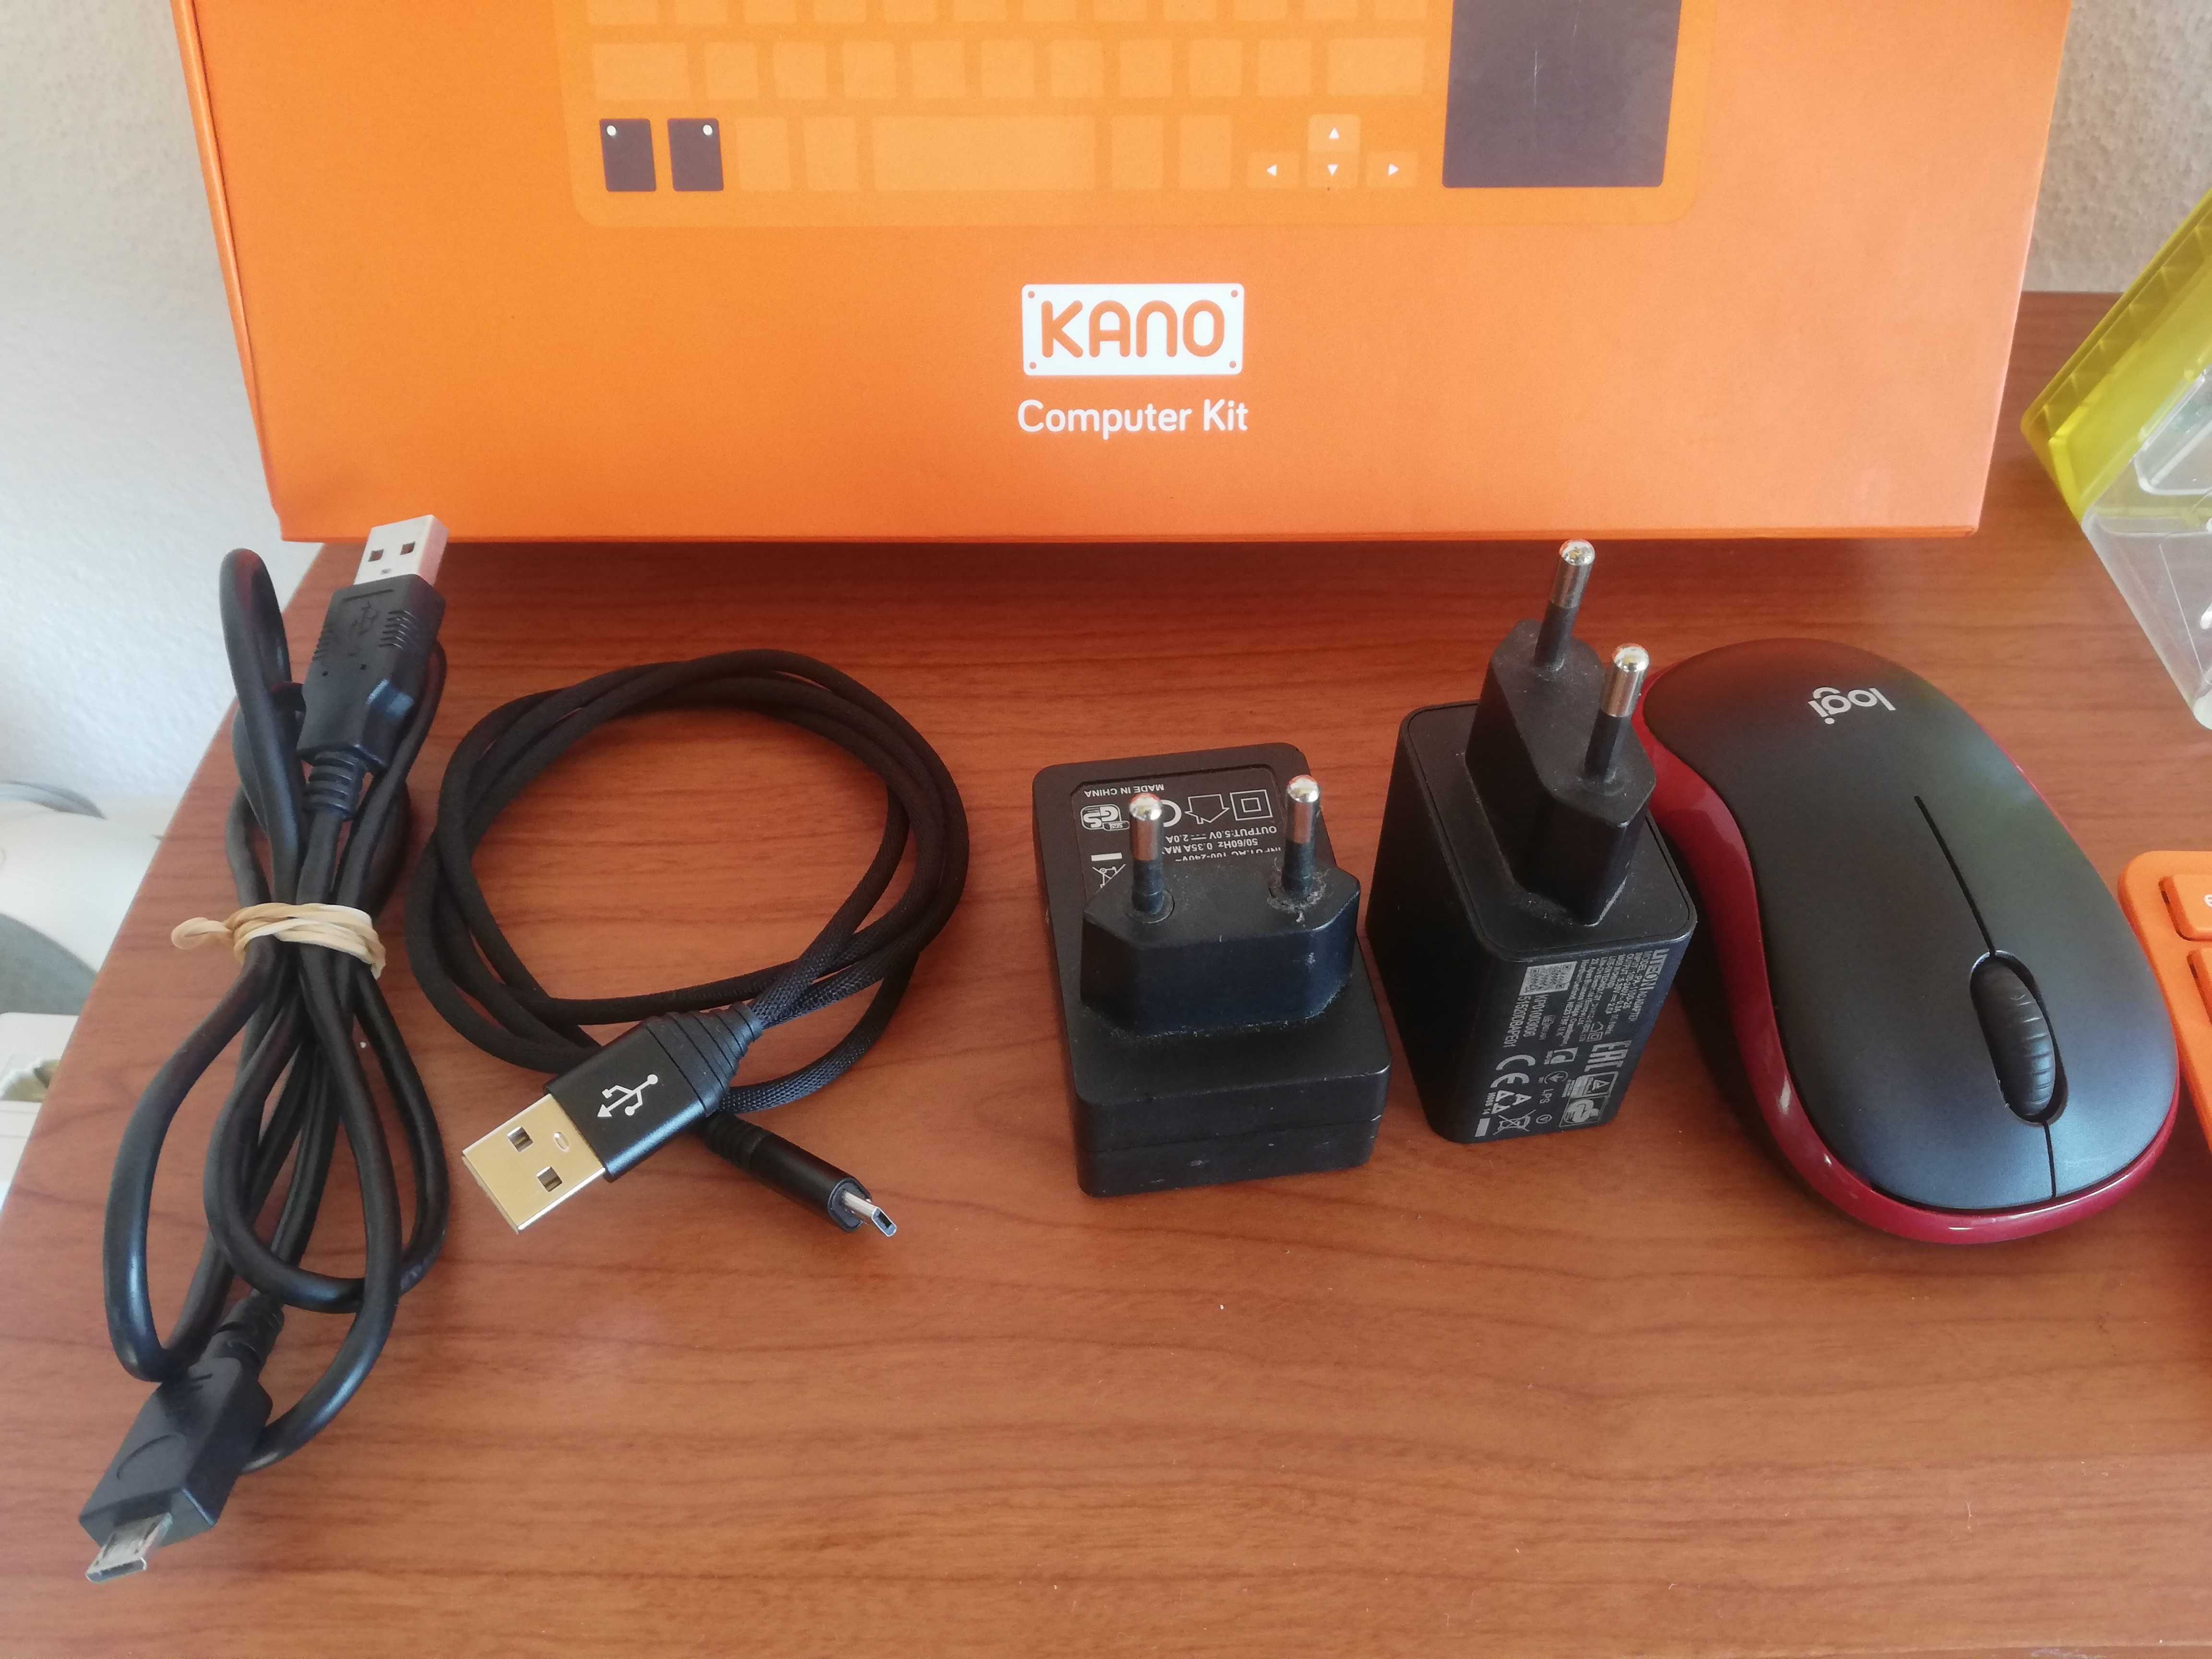 Kano Computer kit Raspberry Pi 3B+ mini computer